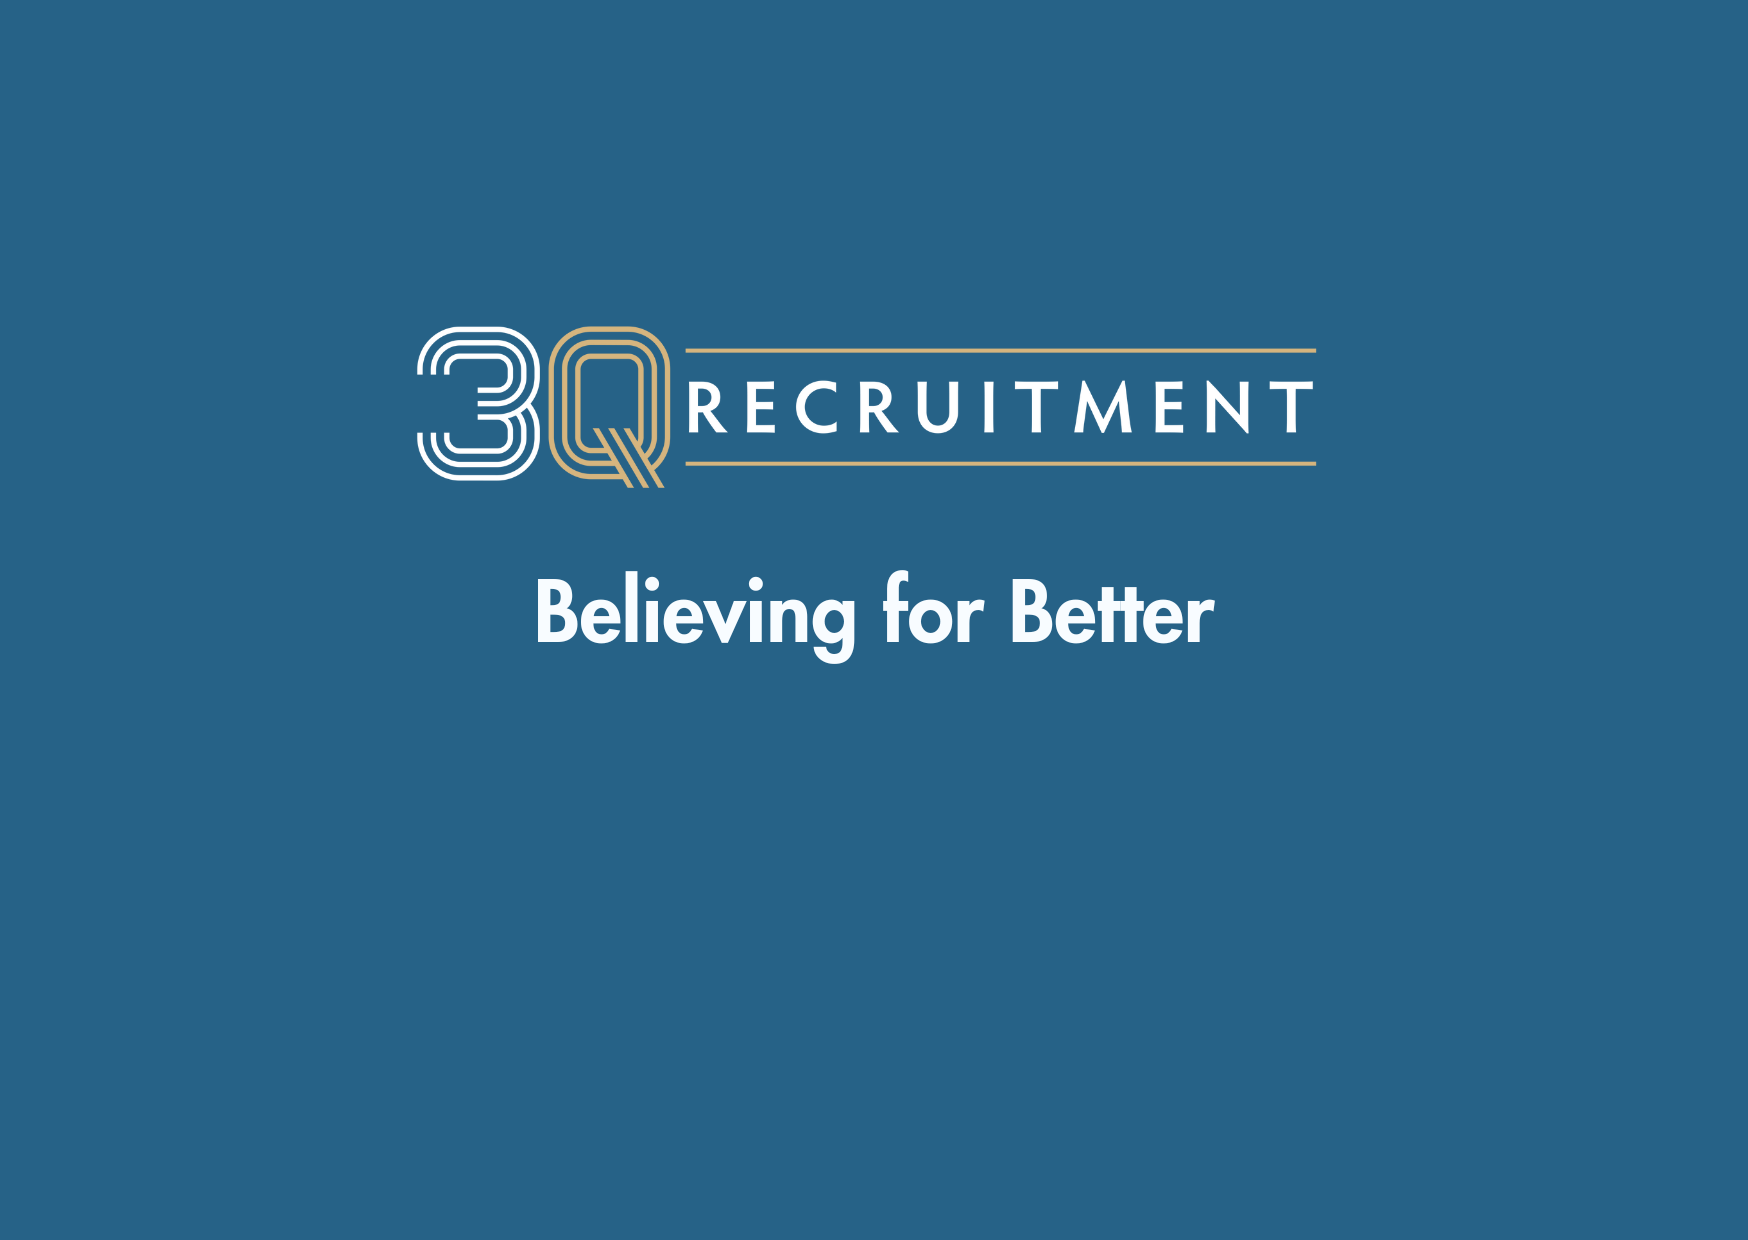 3Q Recruitment Believing for Better